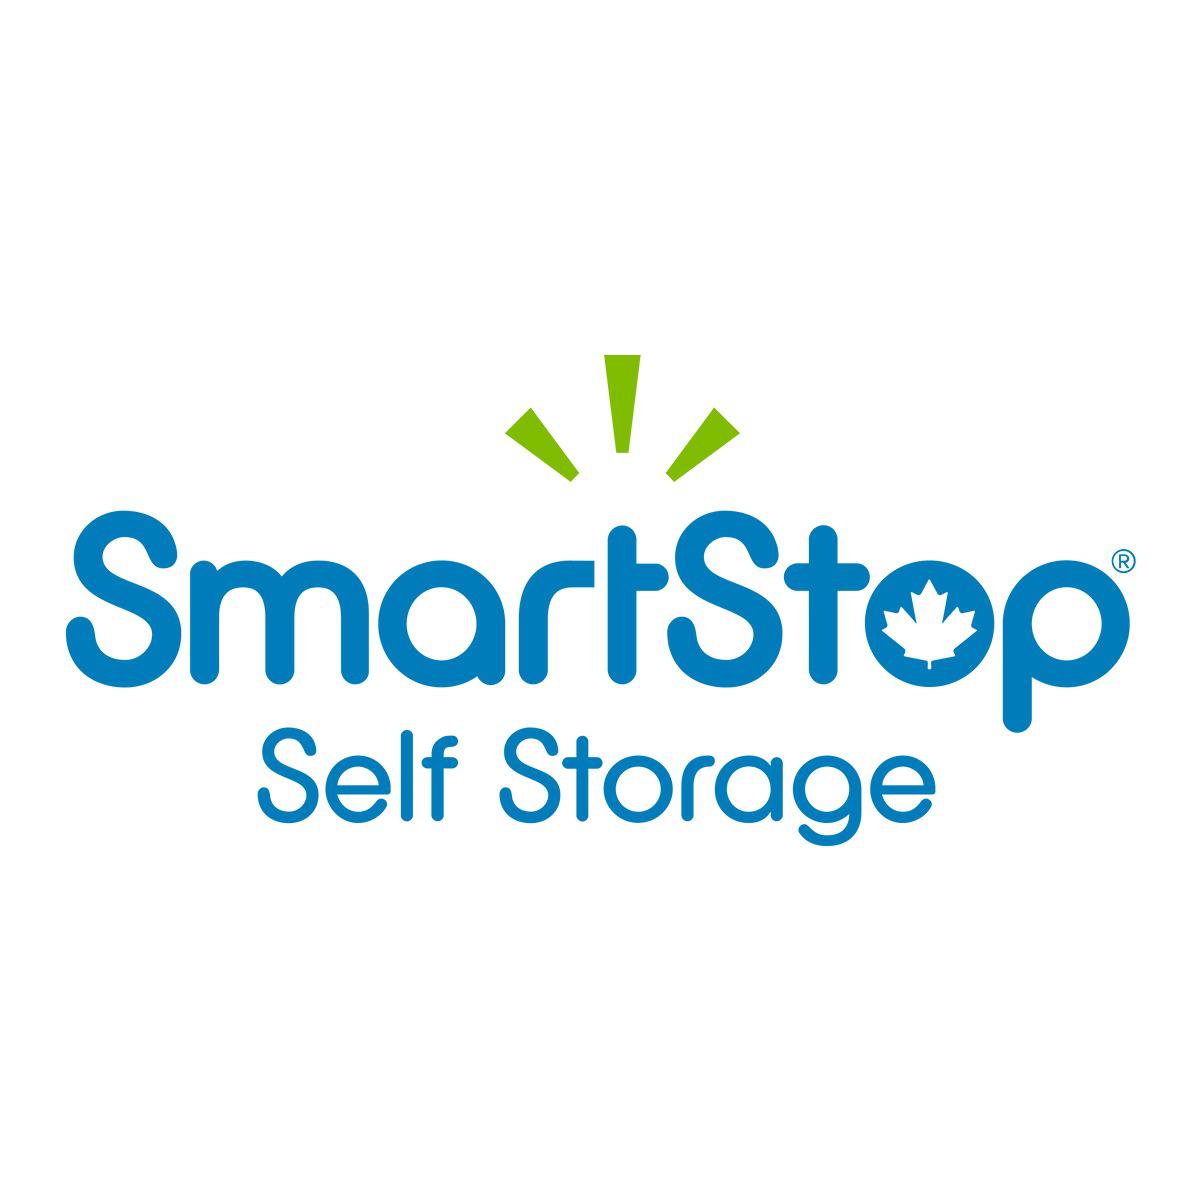 SmartStop Self Storage in Brampton: Logo